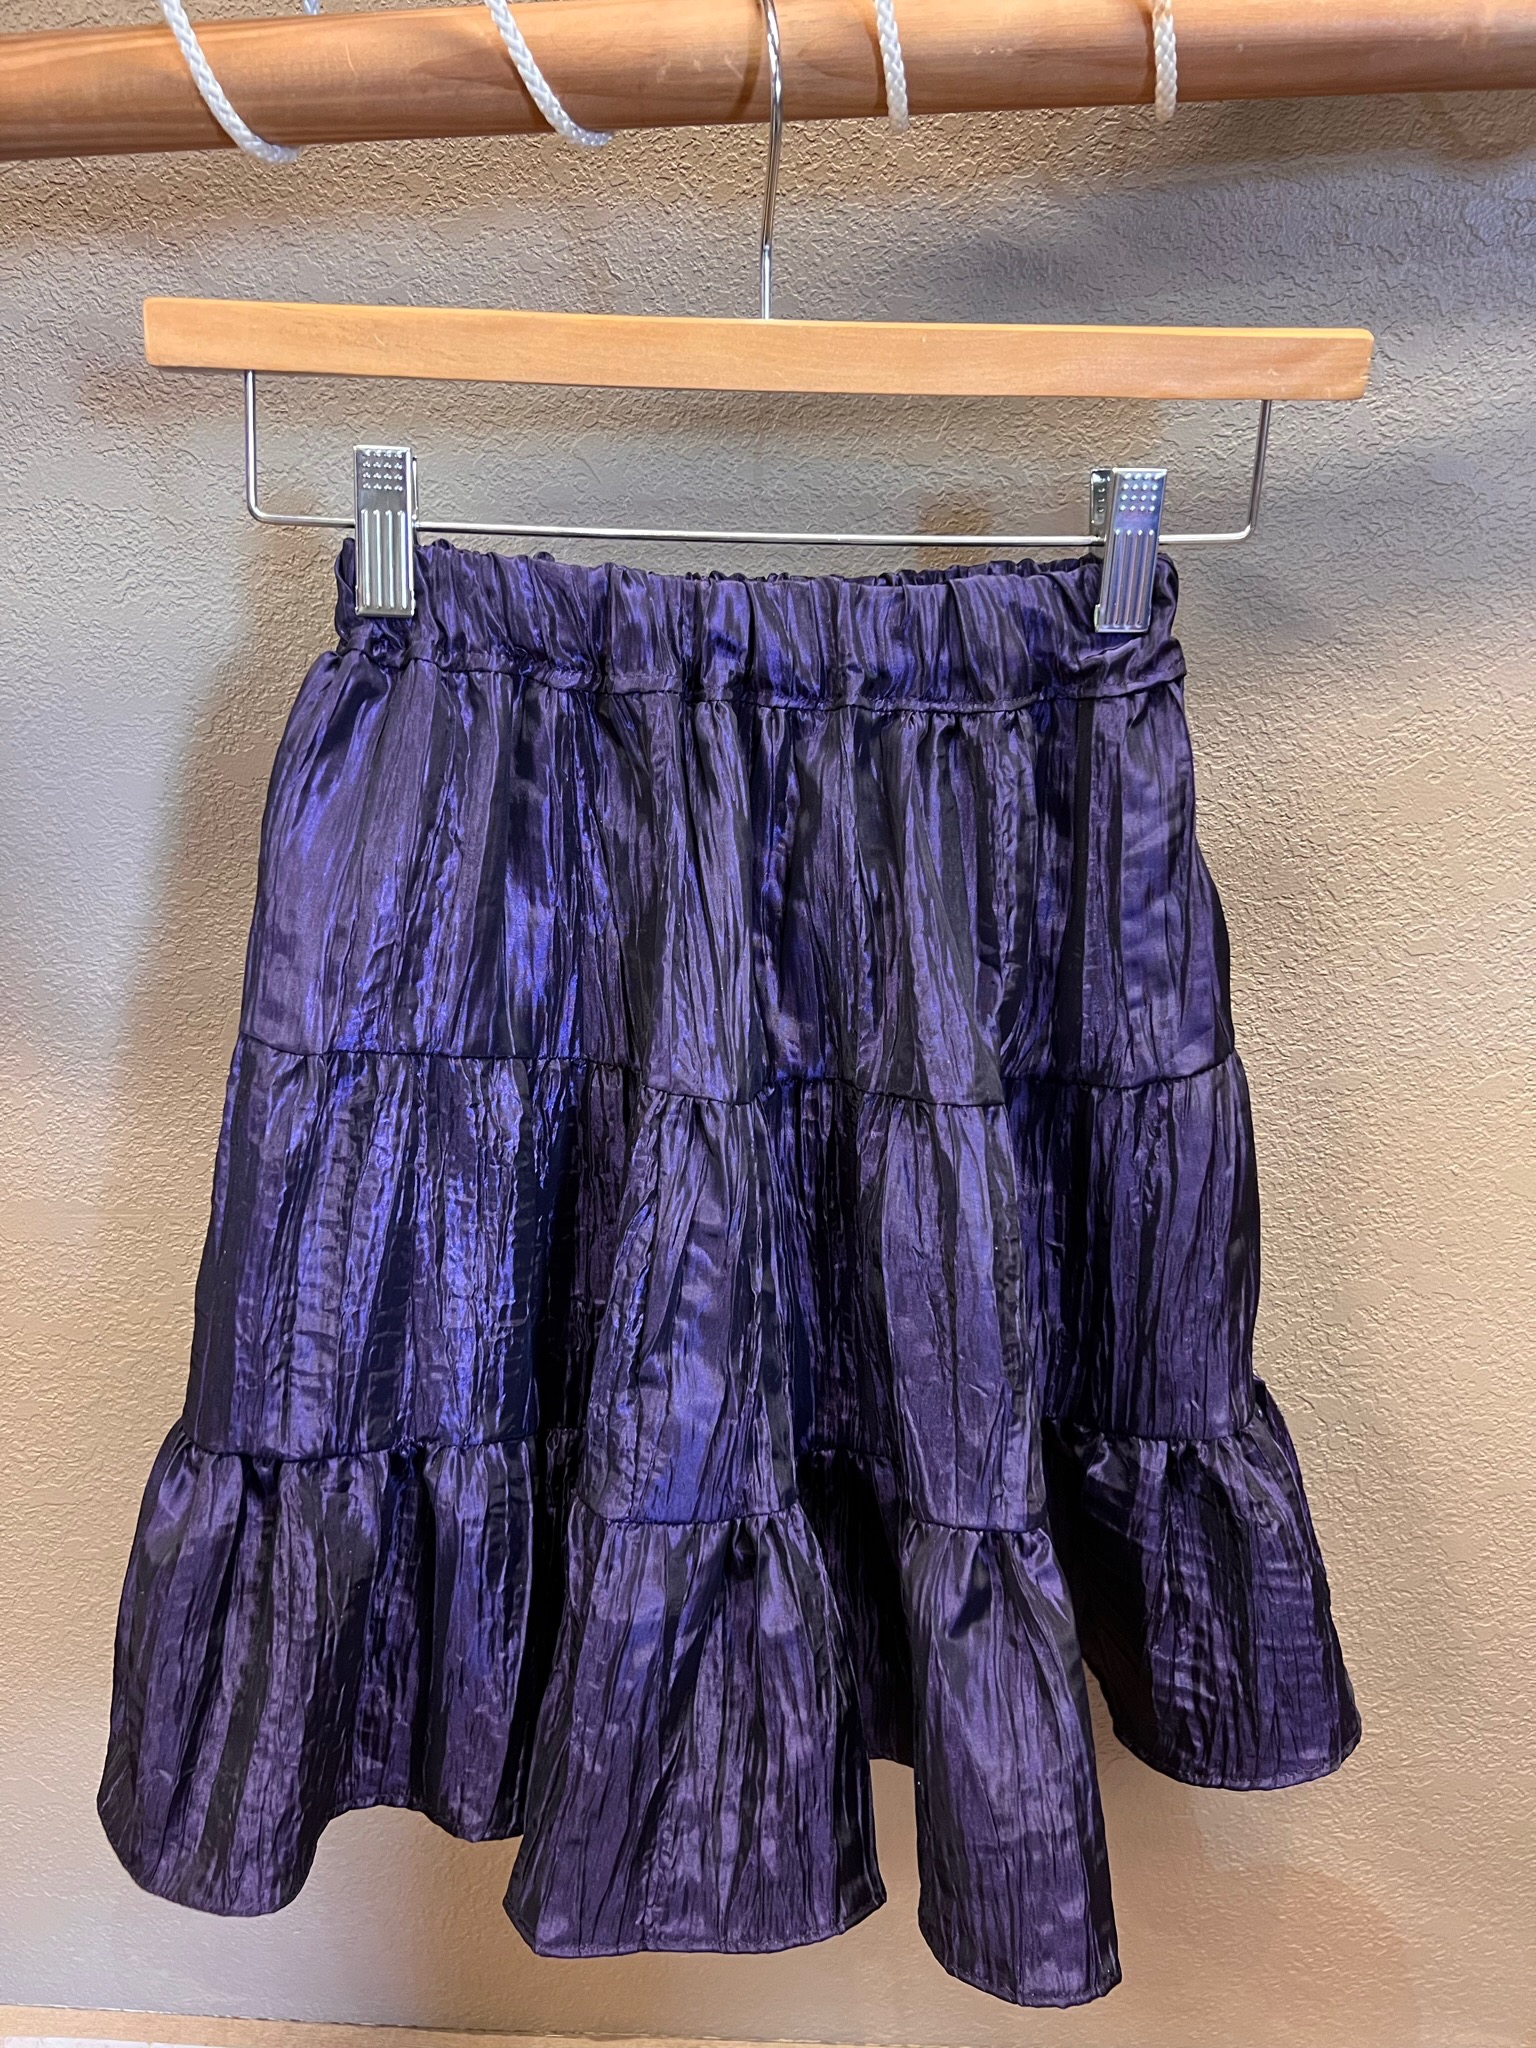 Childs Crushed Satin Skirt Purple